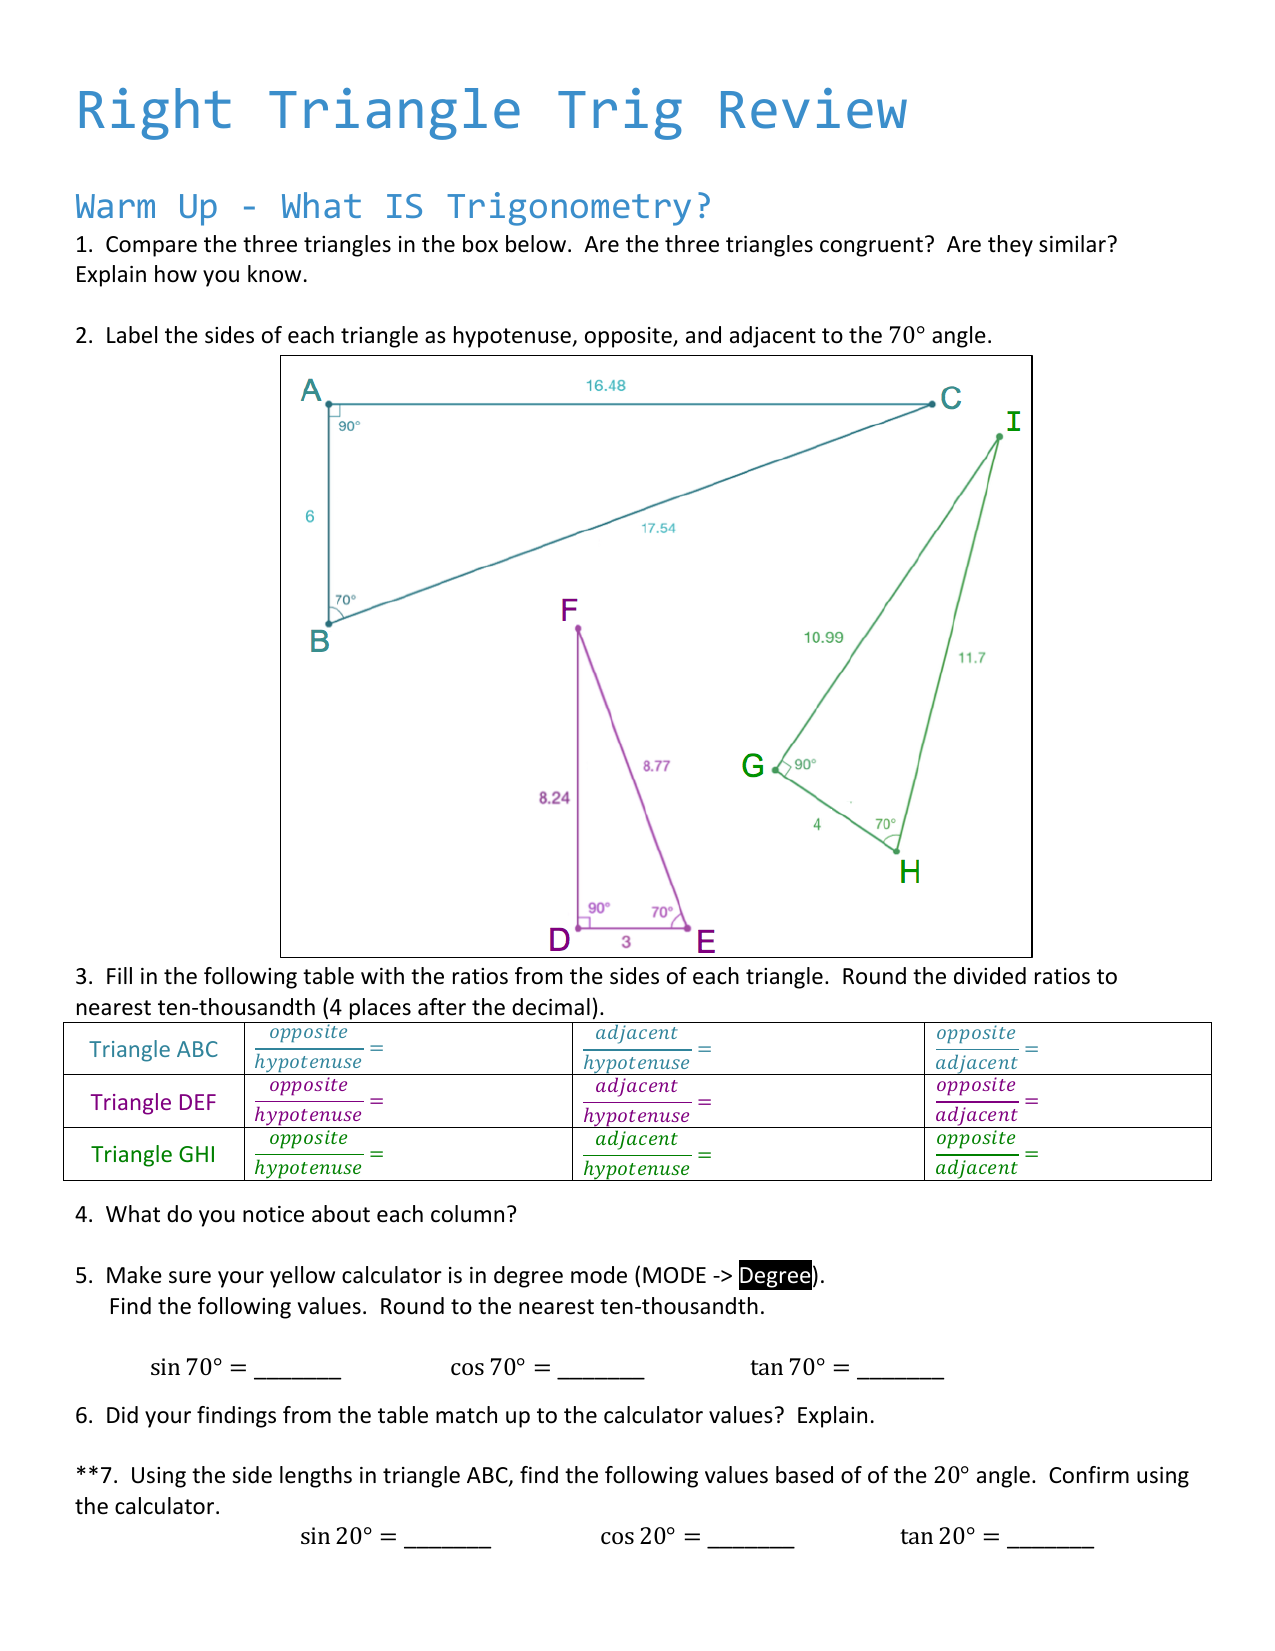 trigonometry worksheet 221.21 chapter 221 answers Pertaining To Right Triangle Trigonometry Worksheet Answers